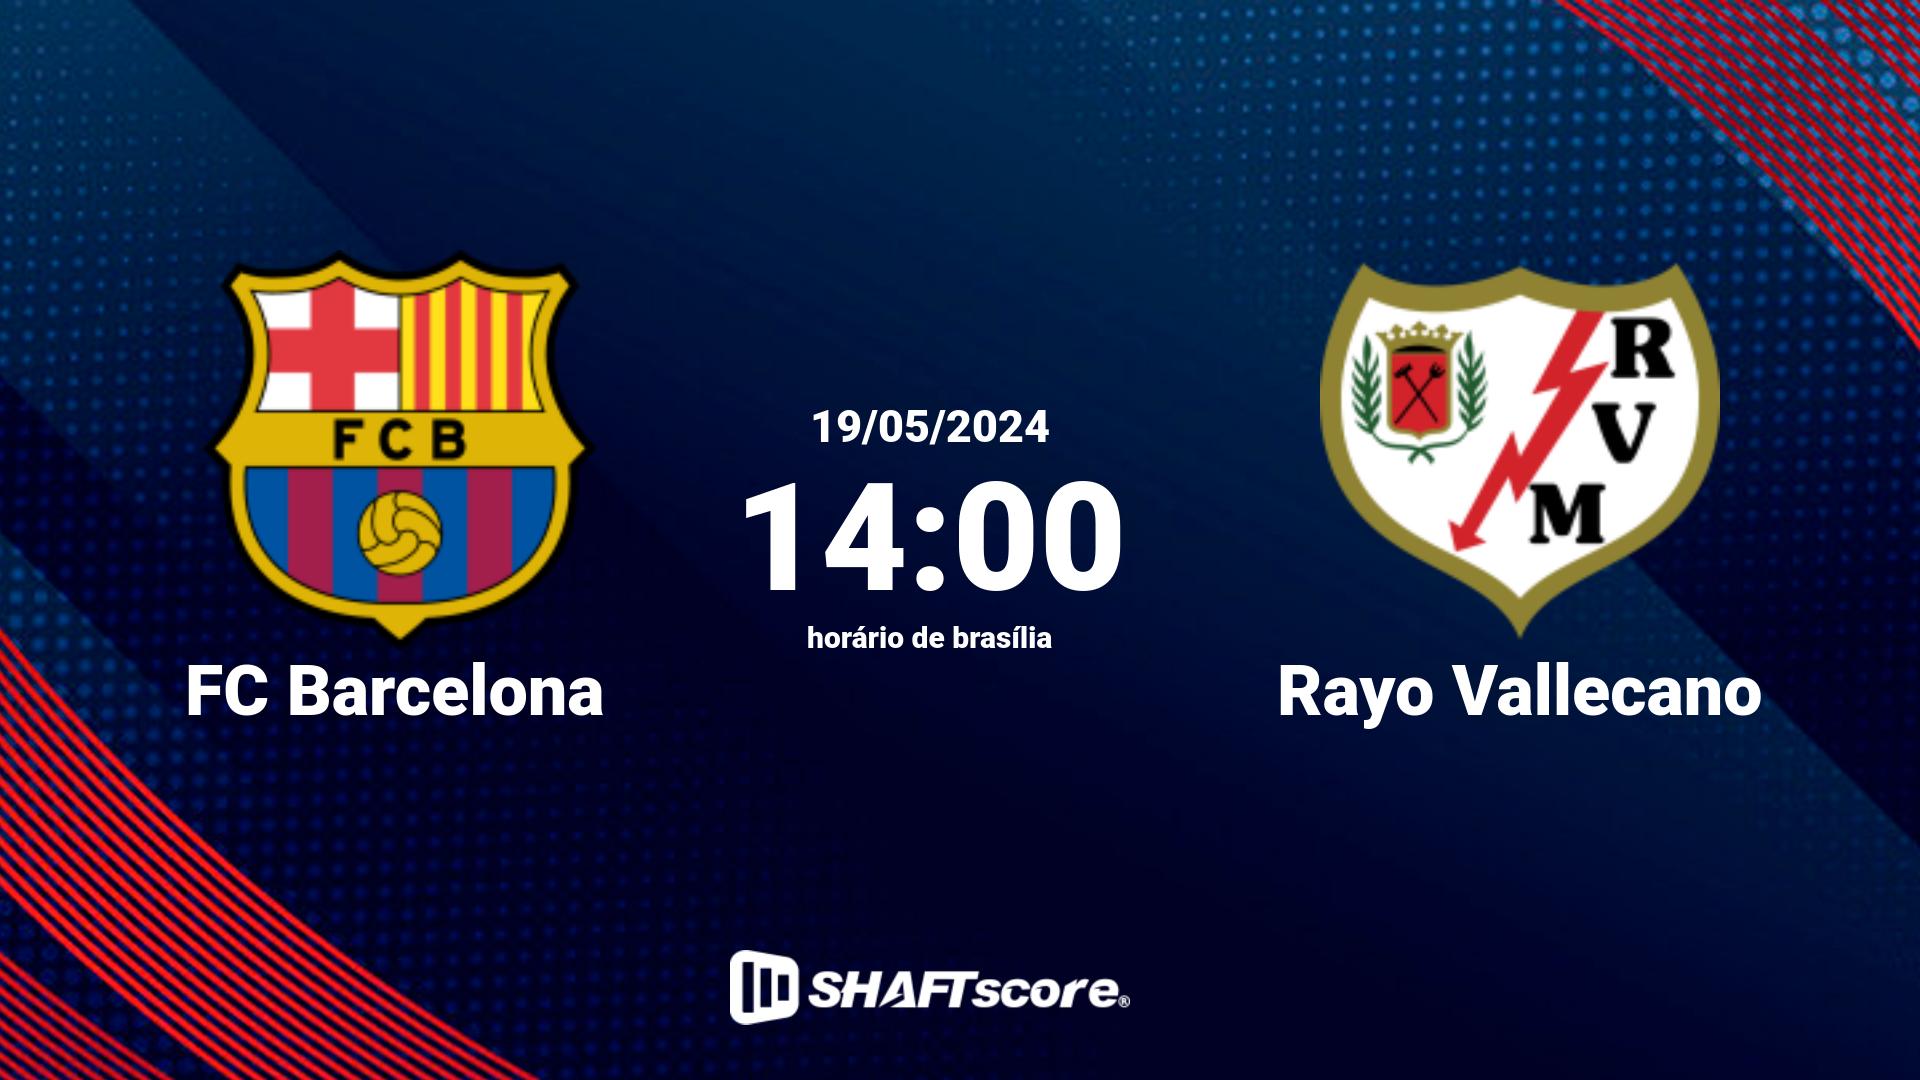 Estatísticas do jogo FC Barcelona vs Rayo Vallecano 19.05 14:00